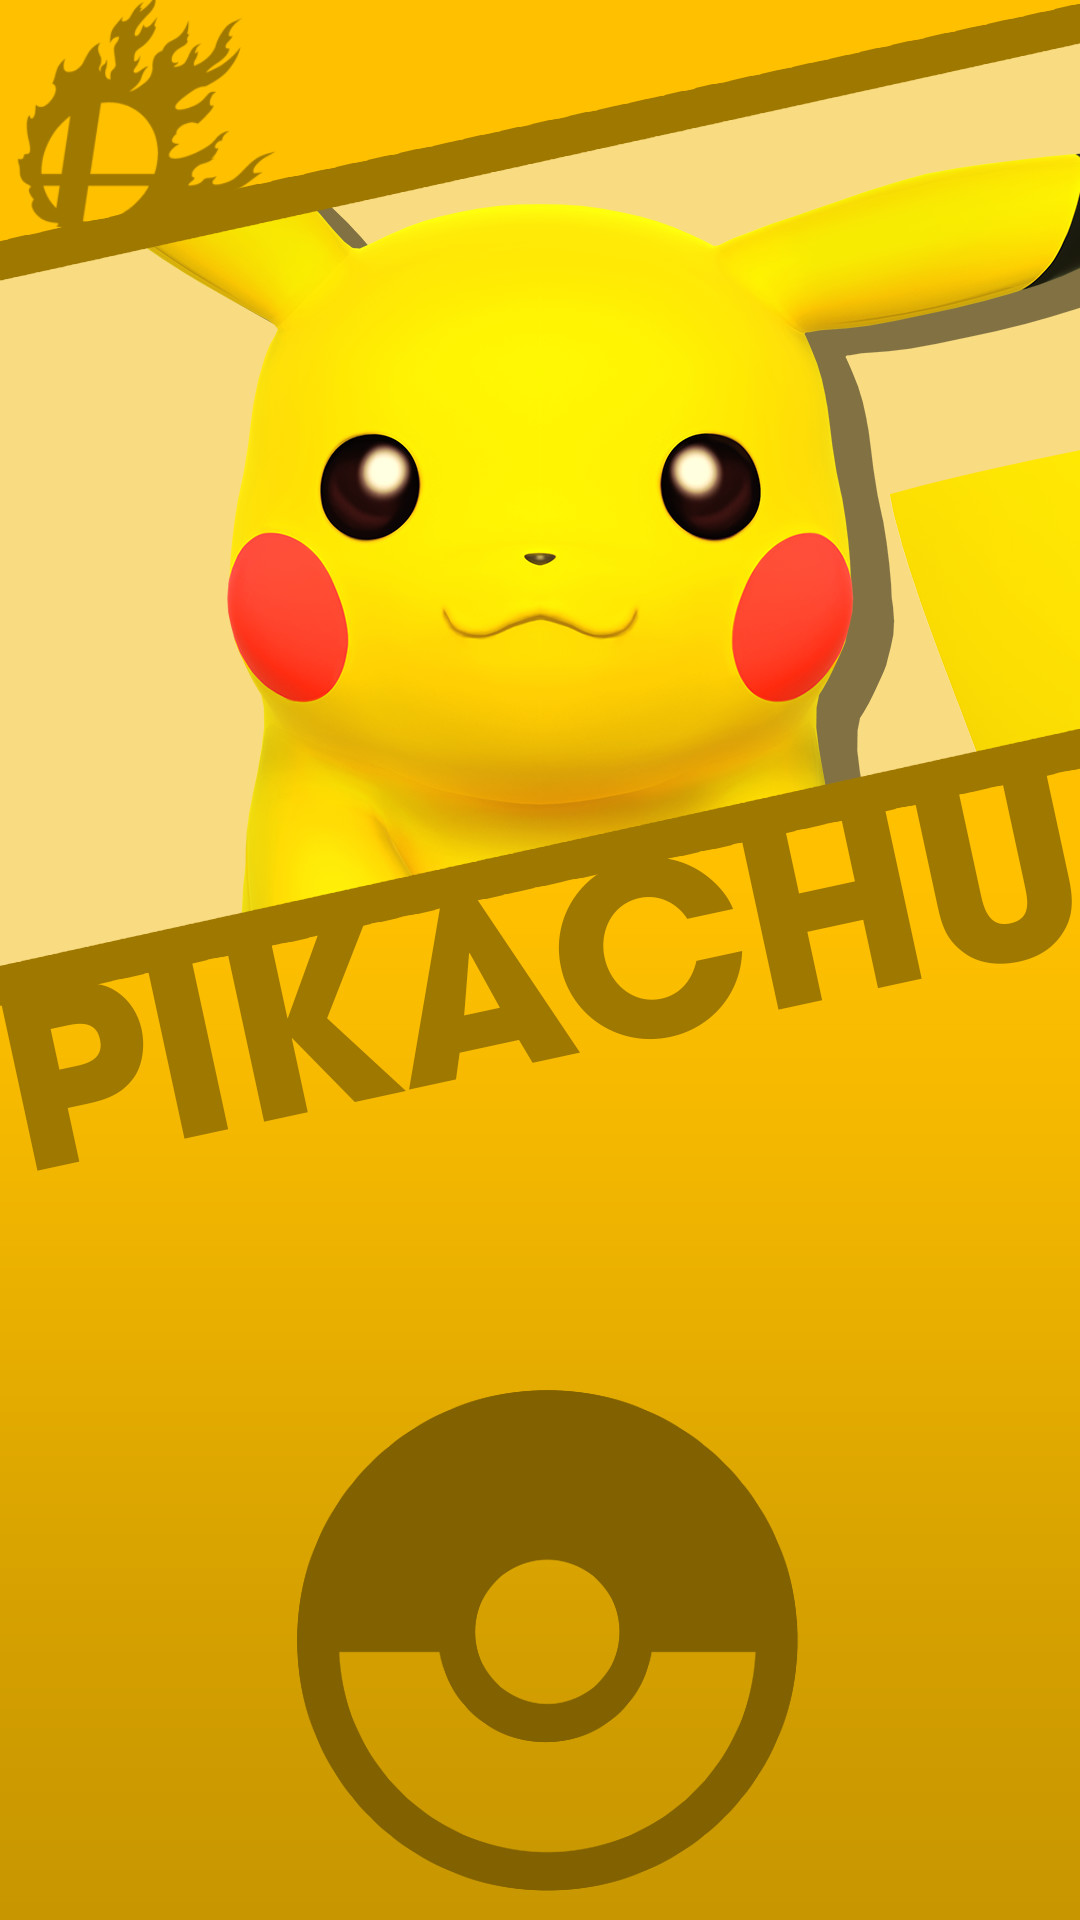 1080x1920 Phone Wallpaper by MrThatKidAlex24 Pikachu Smash Bros. Phone Wallpaper by  MrThatKidAlex24